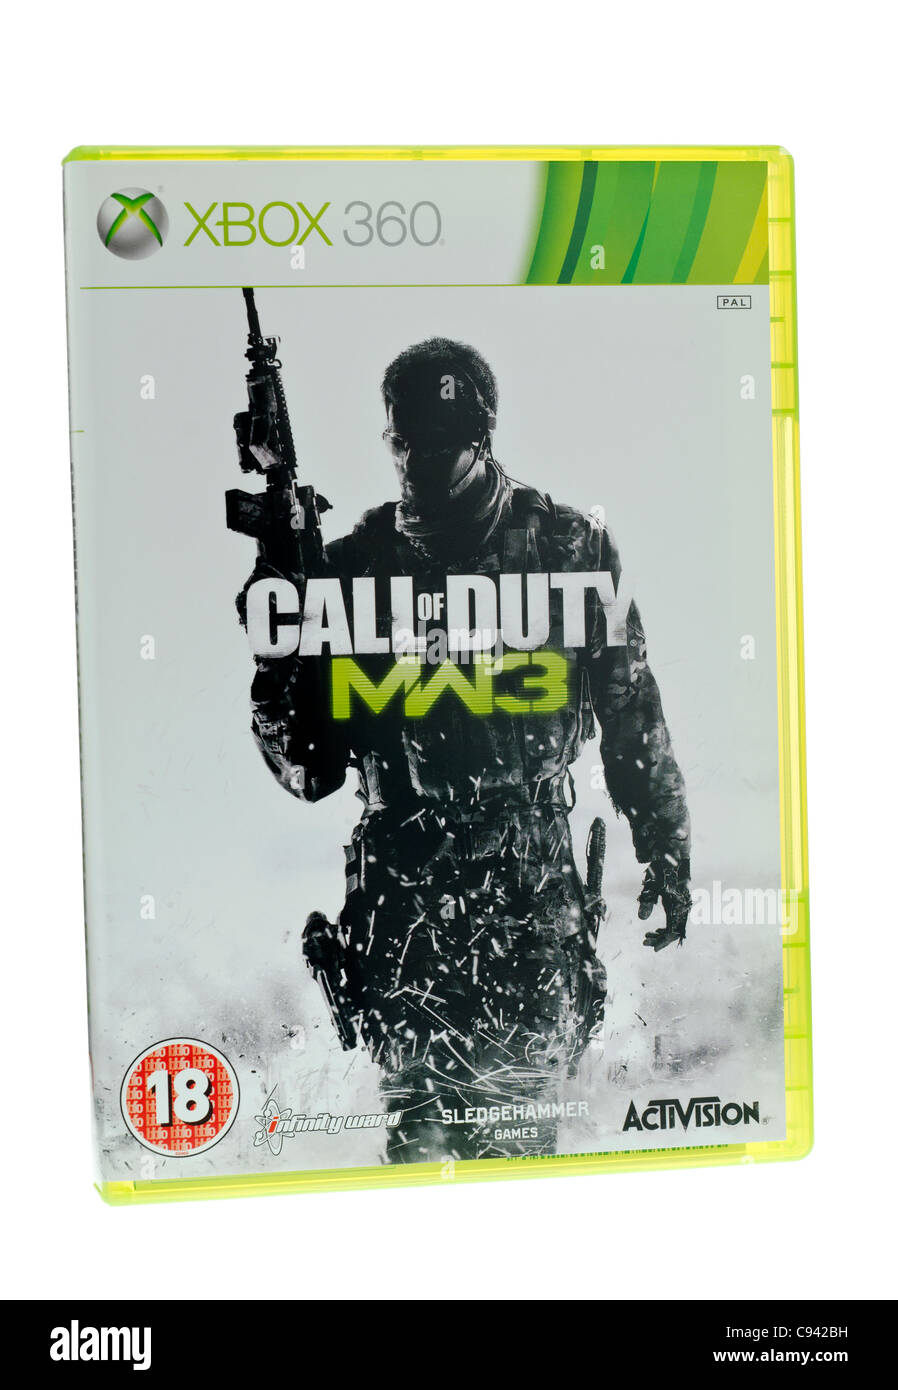 Xbox 360 - Call of Duty: Modern Warfare 3 Video Game Stock Photo